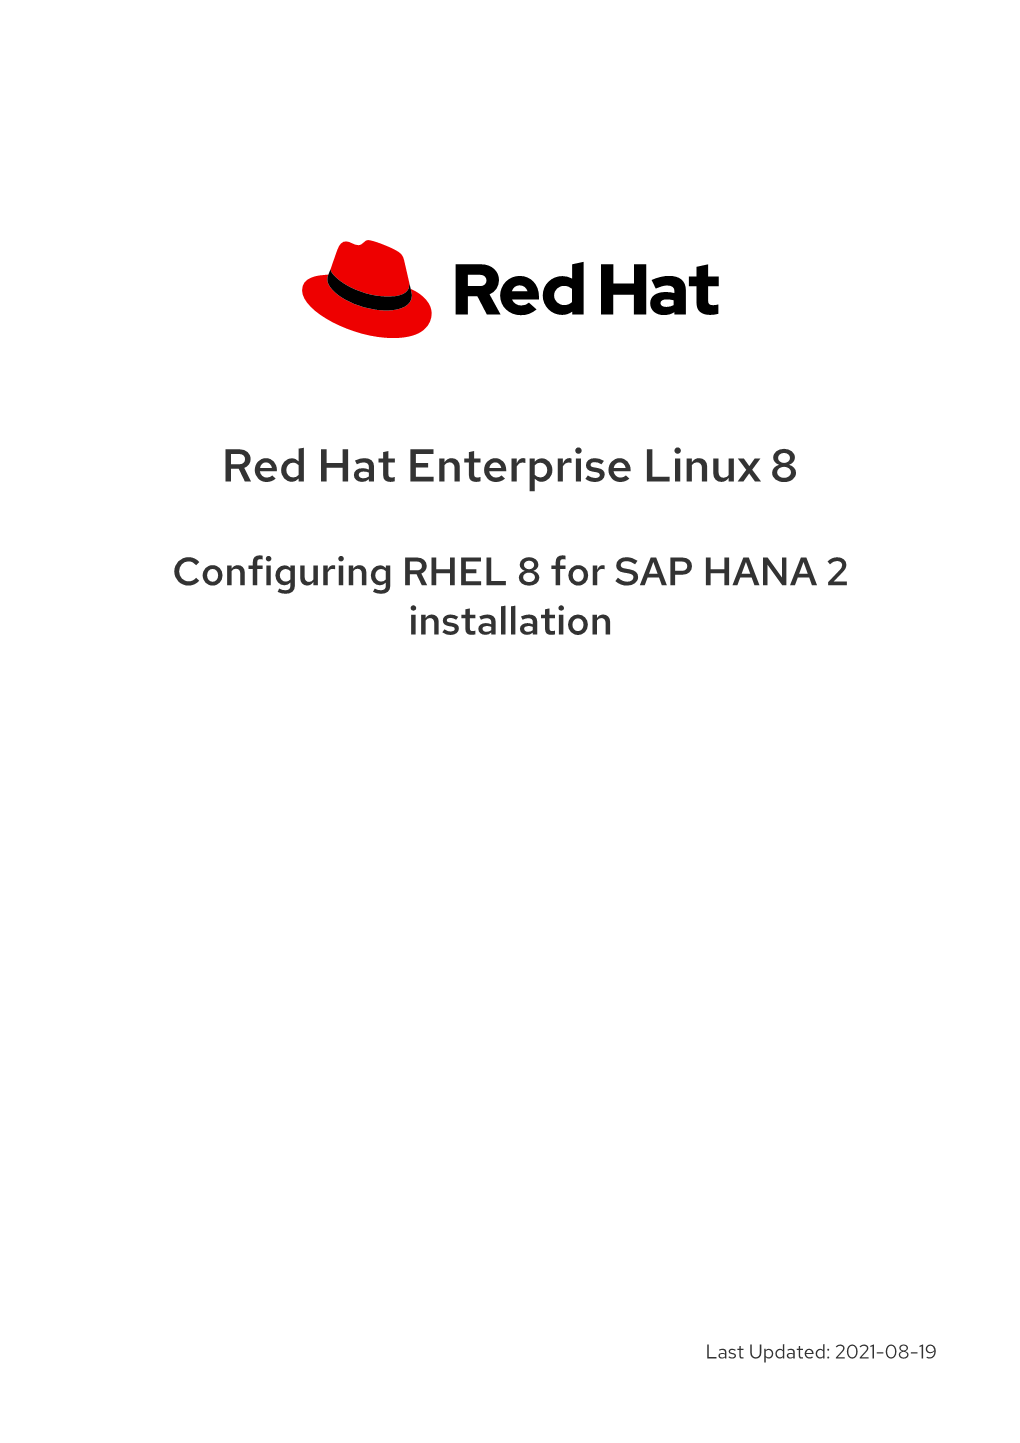 Configuring RHEL 8 for SAP HANA 2 Installation